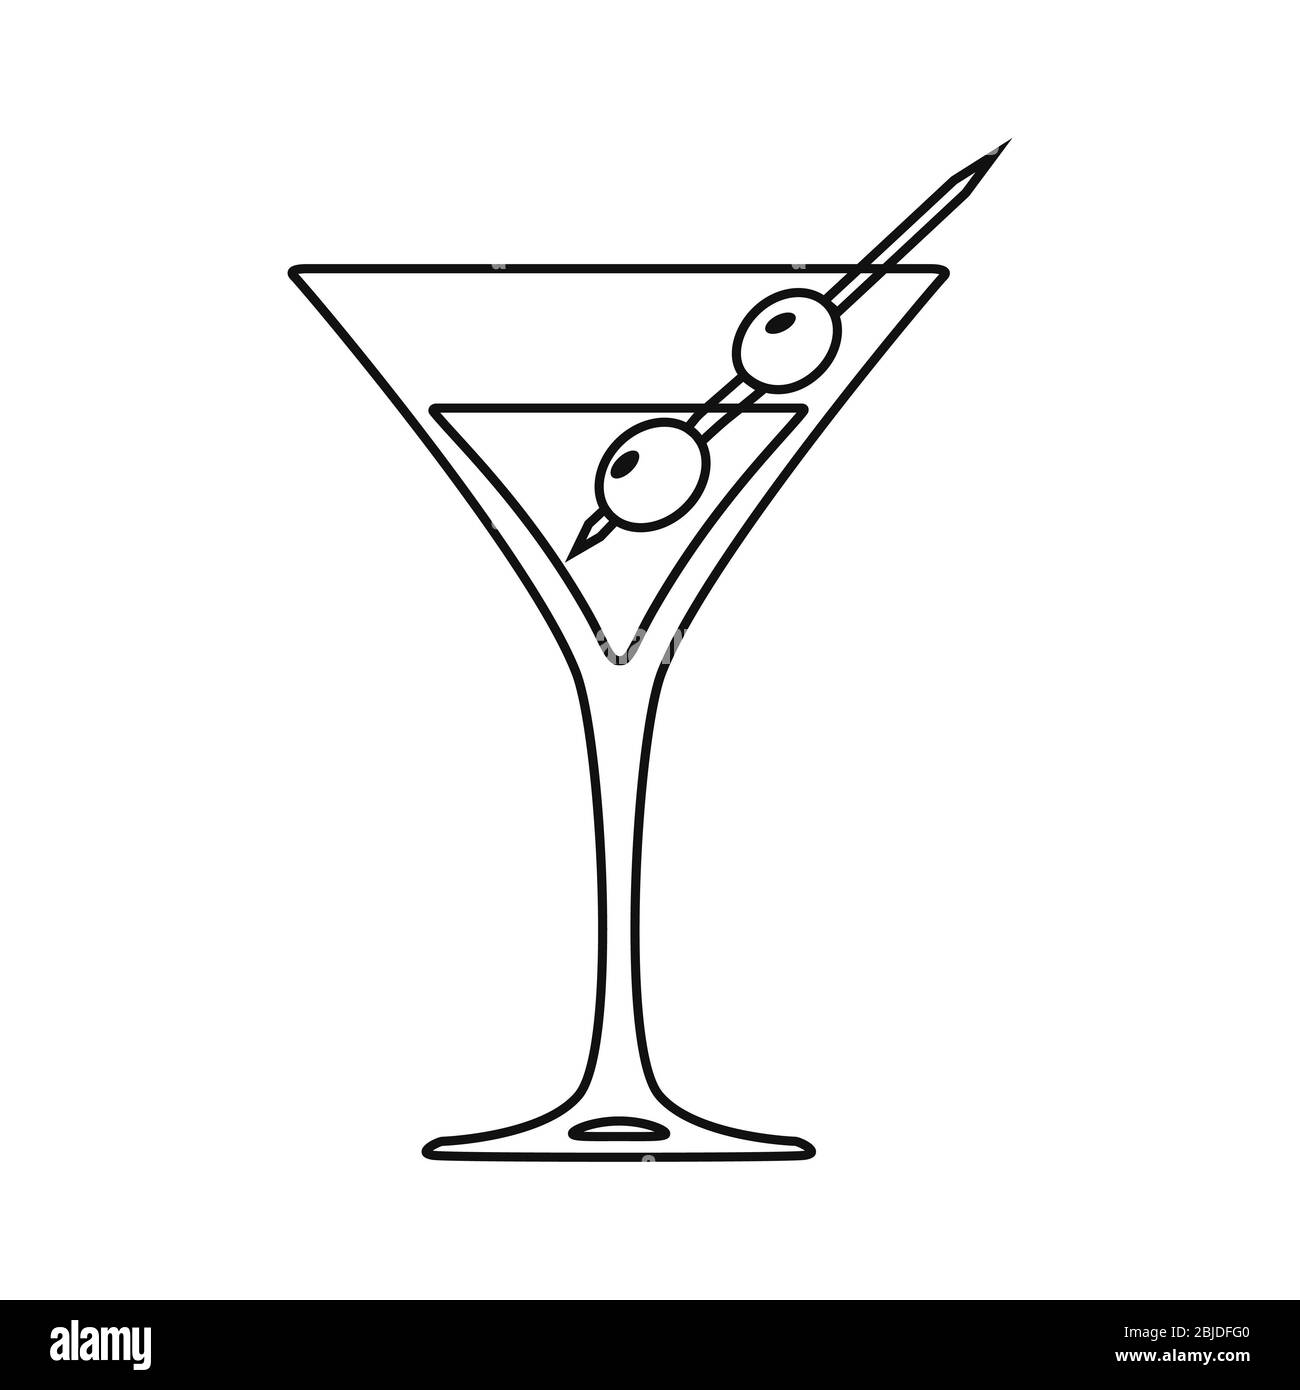 Cocktail glass line art design on white background. Vector illustration  Stock Photo - Alamy